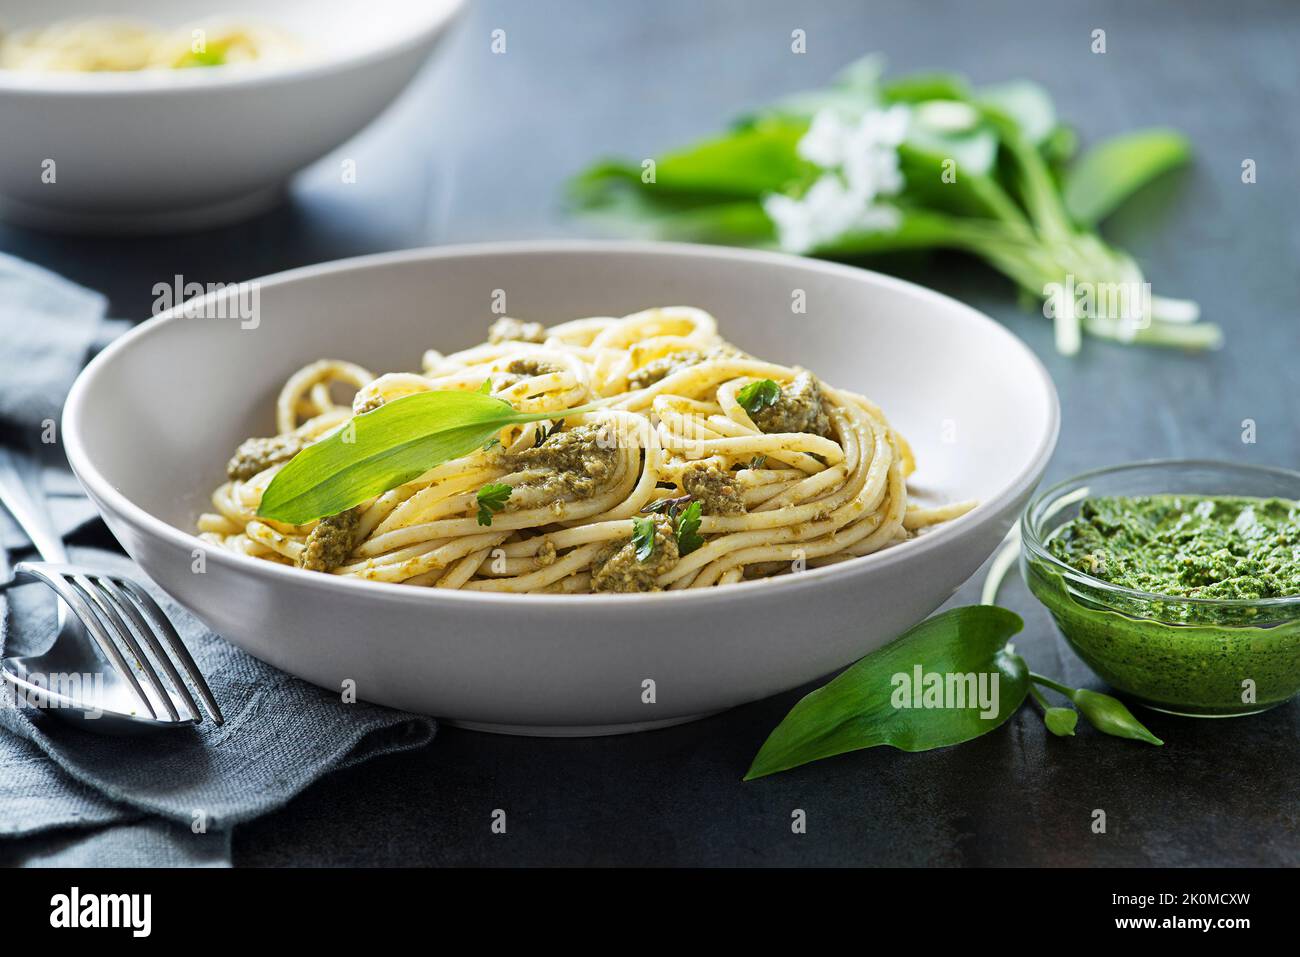 Making Fresh pasta with ramson or wild garlic pesto closeup. Healthy spring food concept Stock Photo